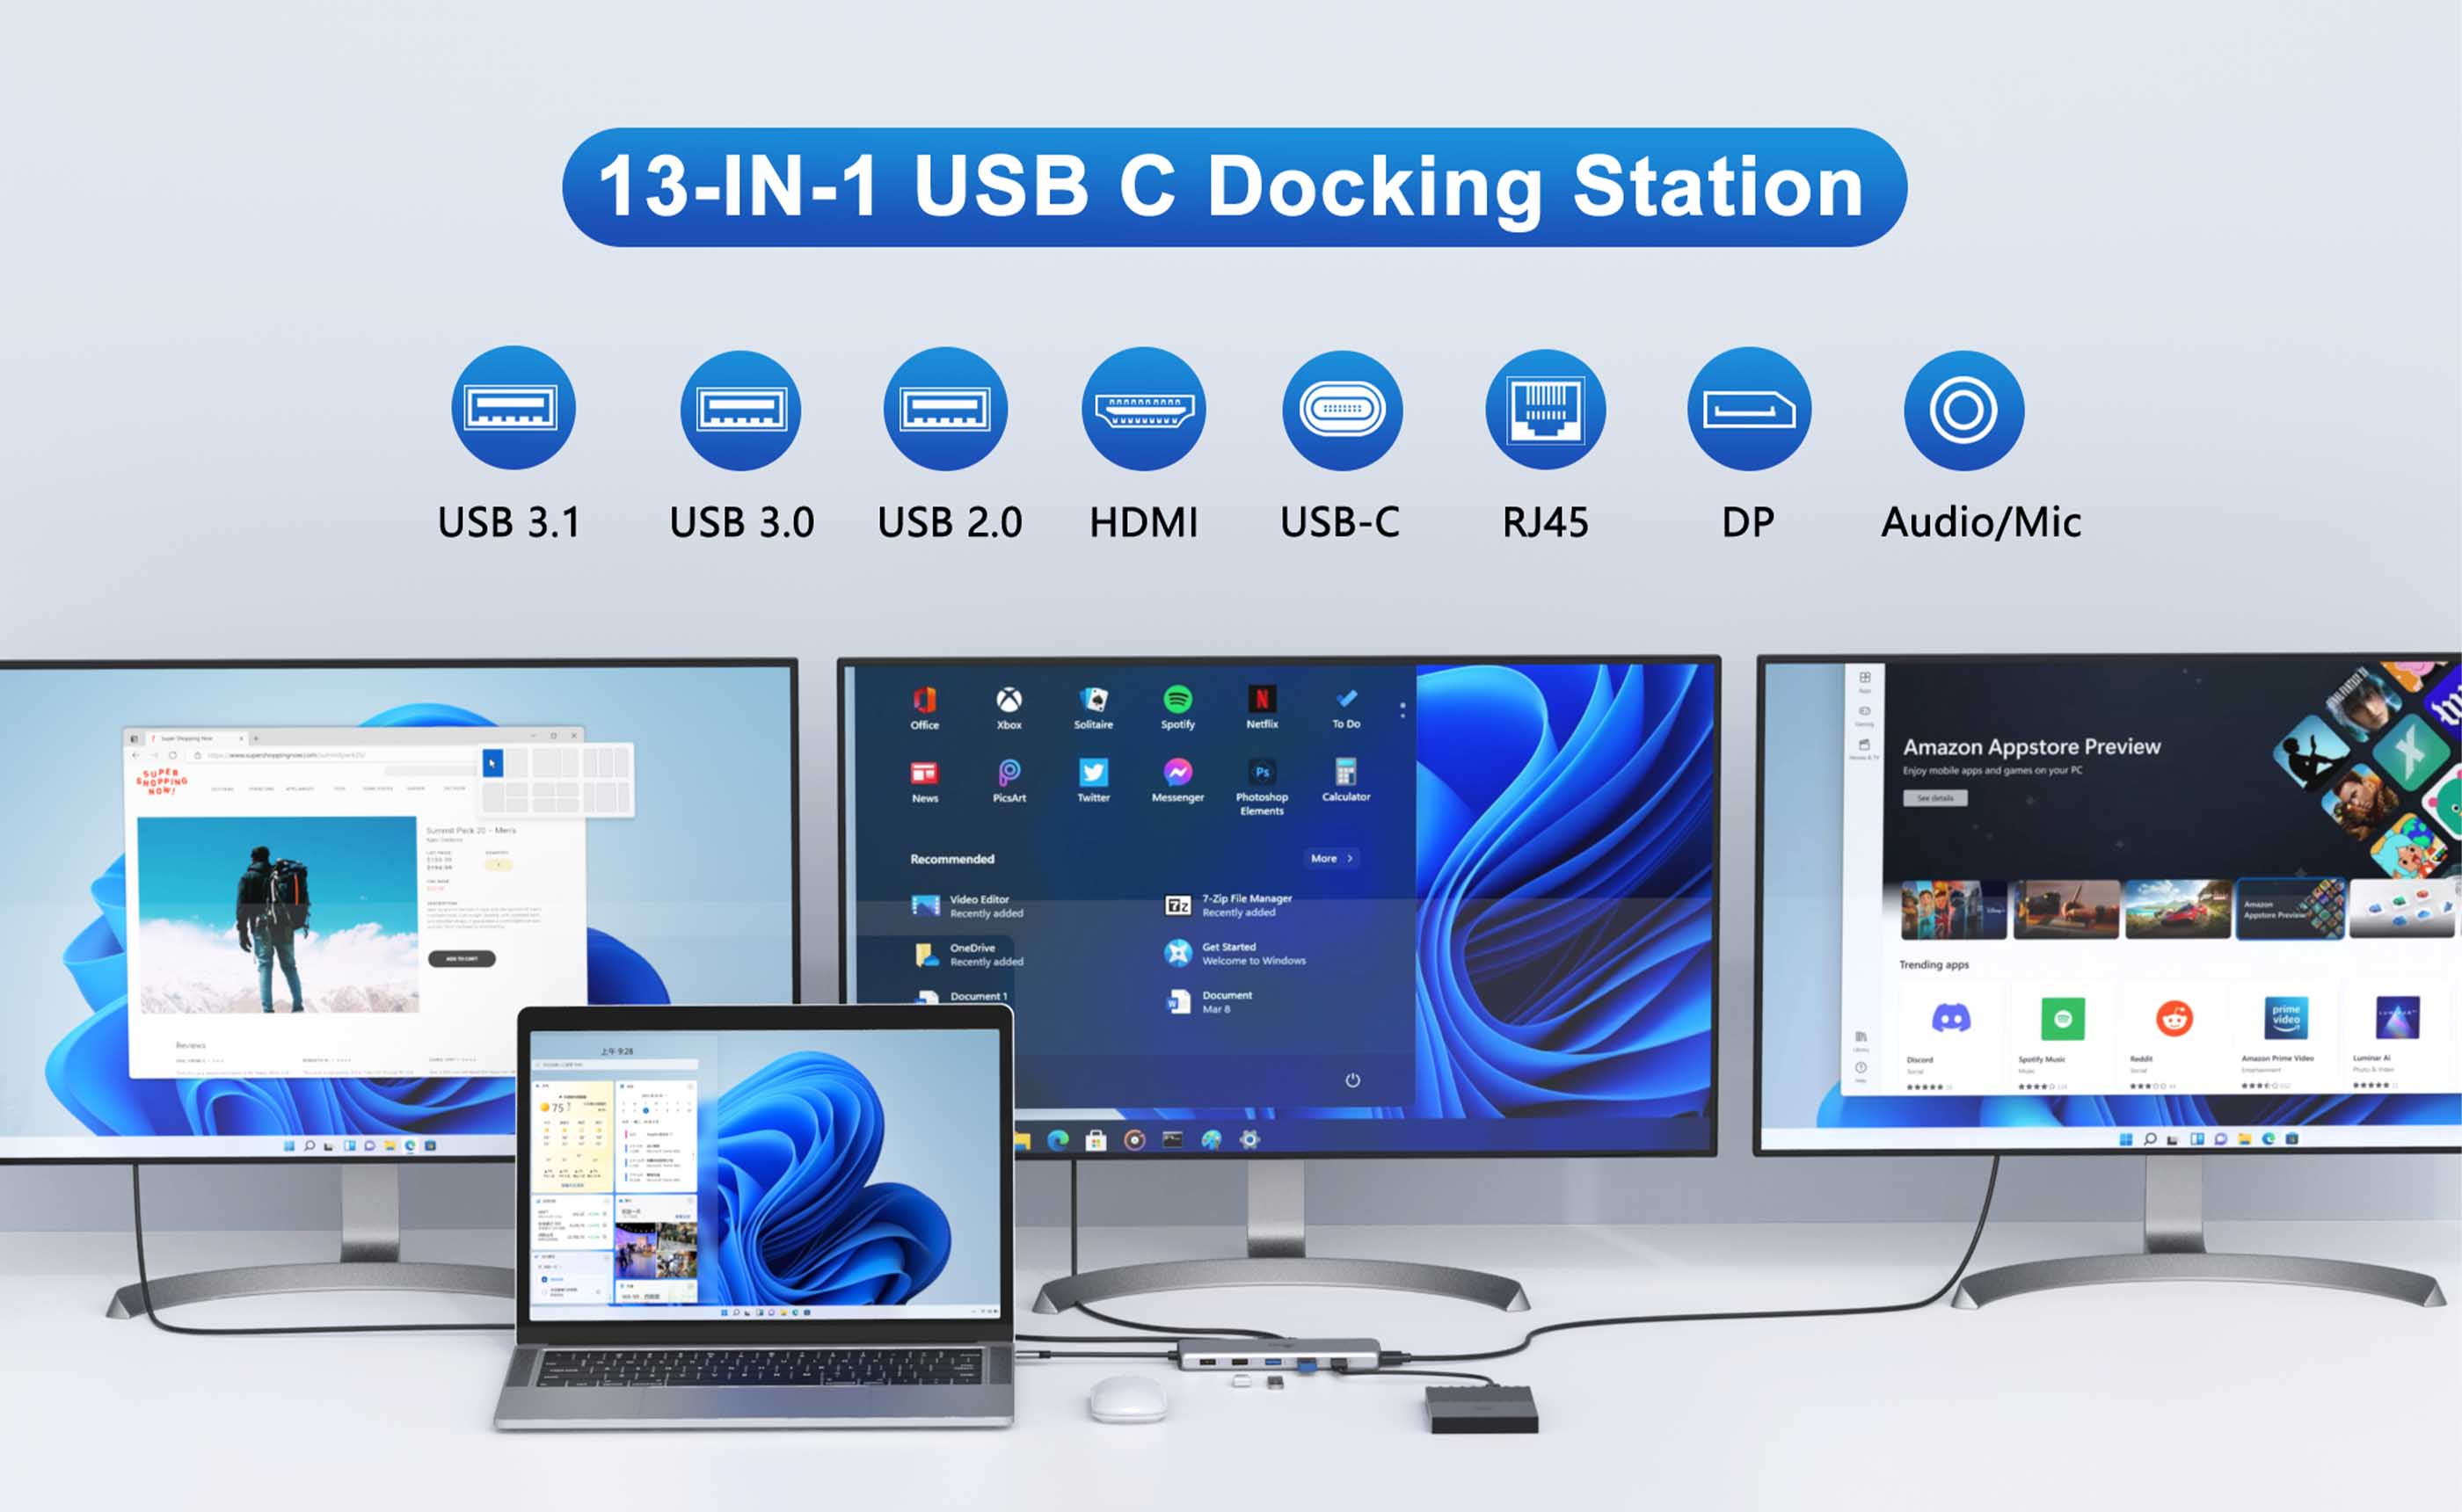 Lionwei 10 Gbps USB C Docking Station Triple Monitor 13-IN-1